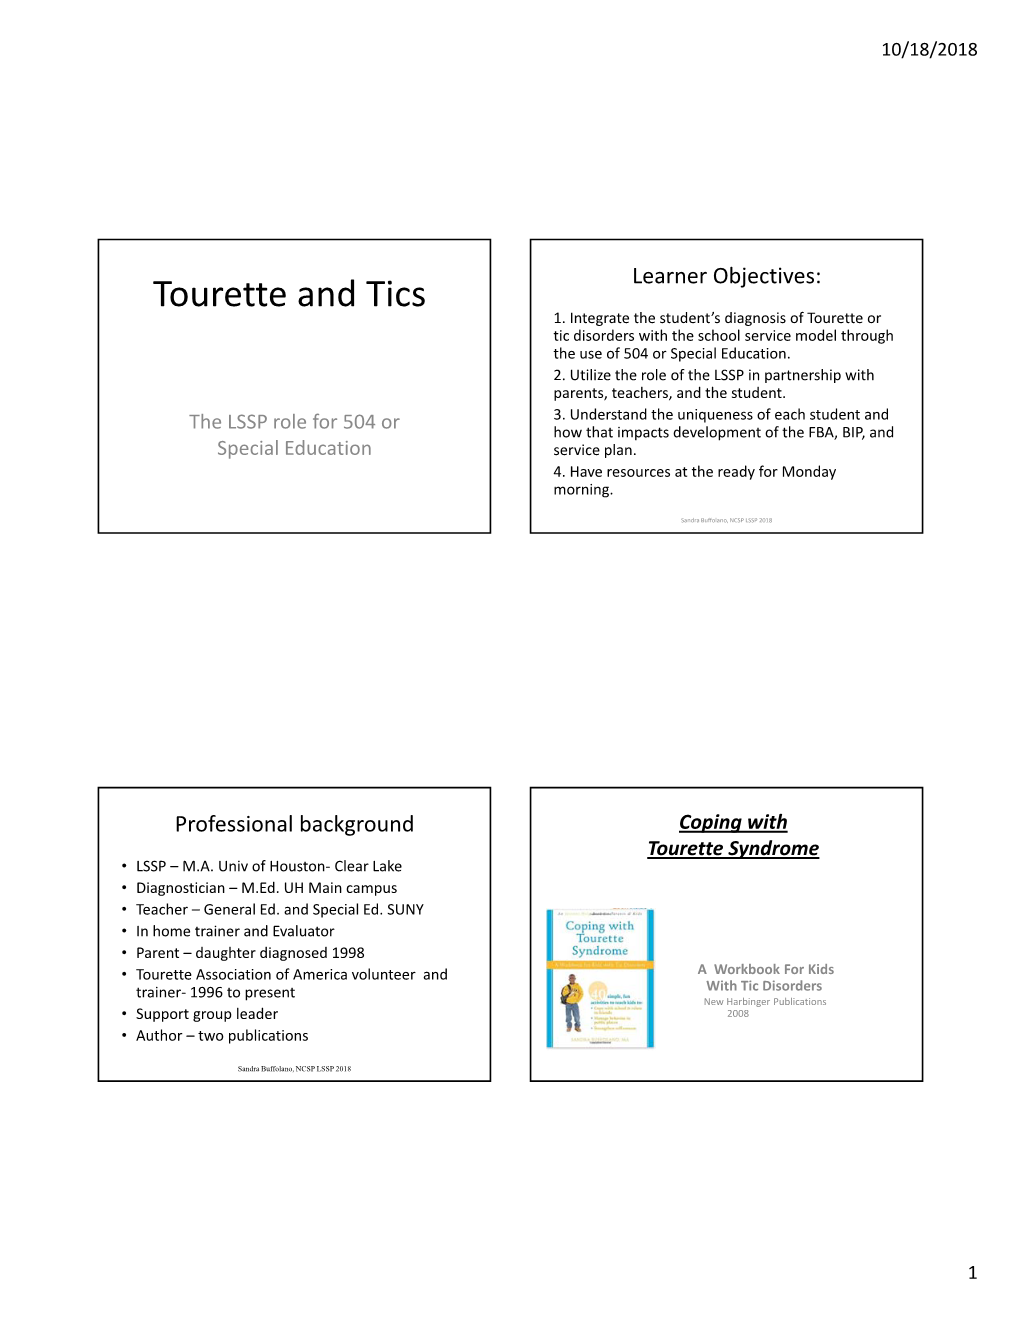 Tourette and Tics Learner Objectives: 1